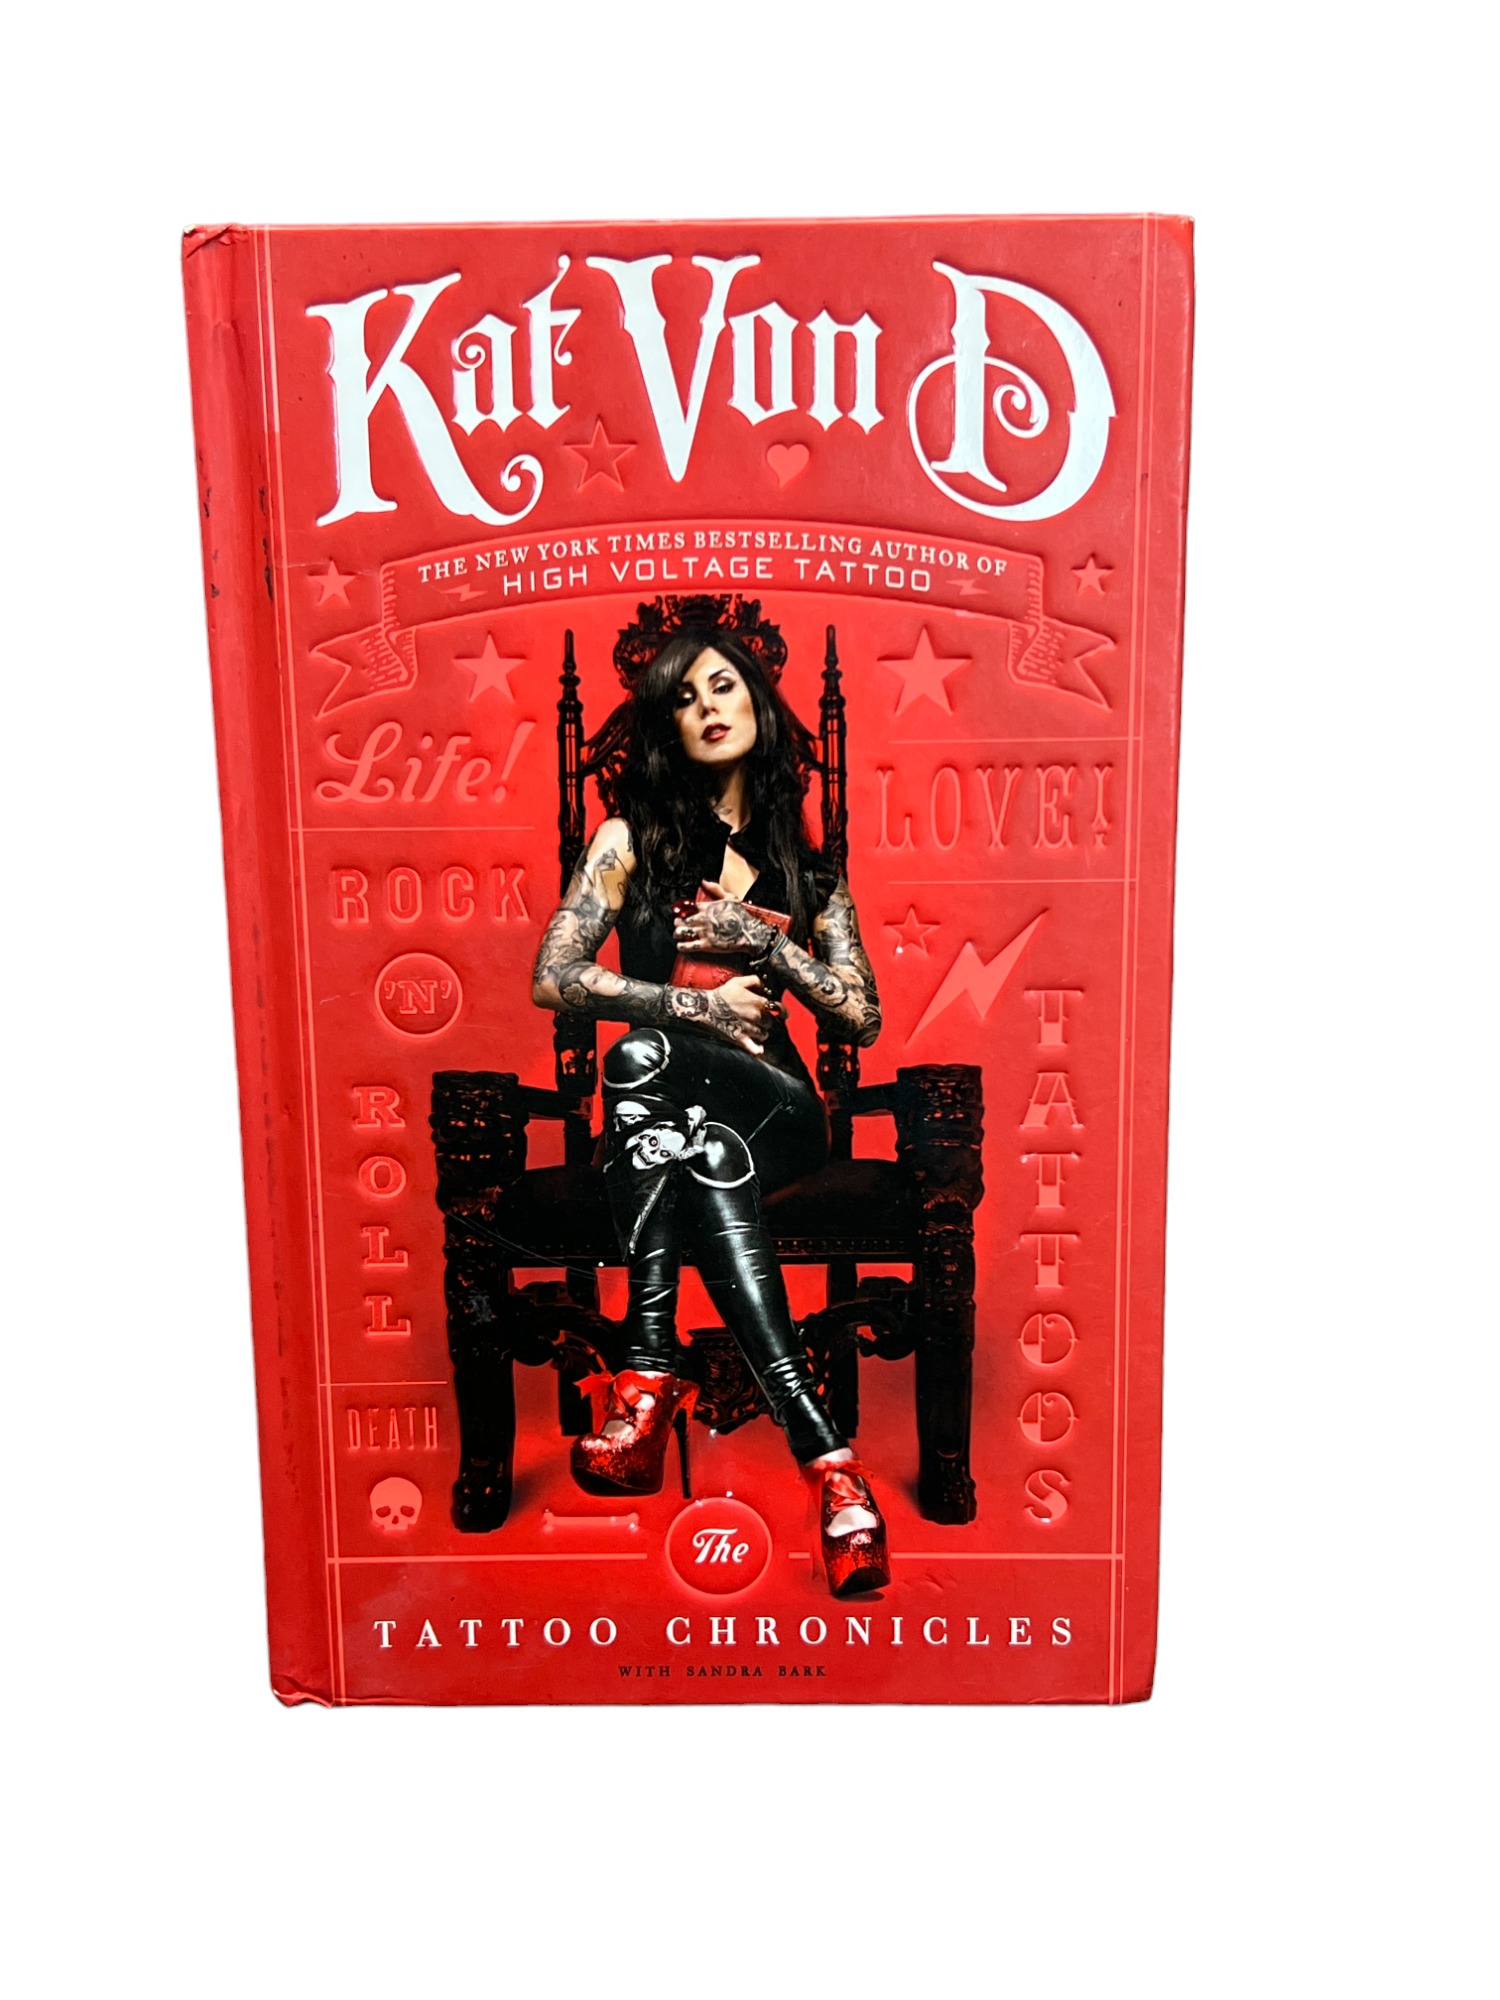 NEW Kat Von D The Tattoo Chronicles With Sandra Bark 9780061953361 | eBay